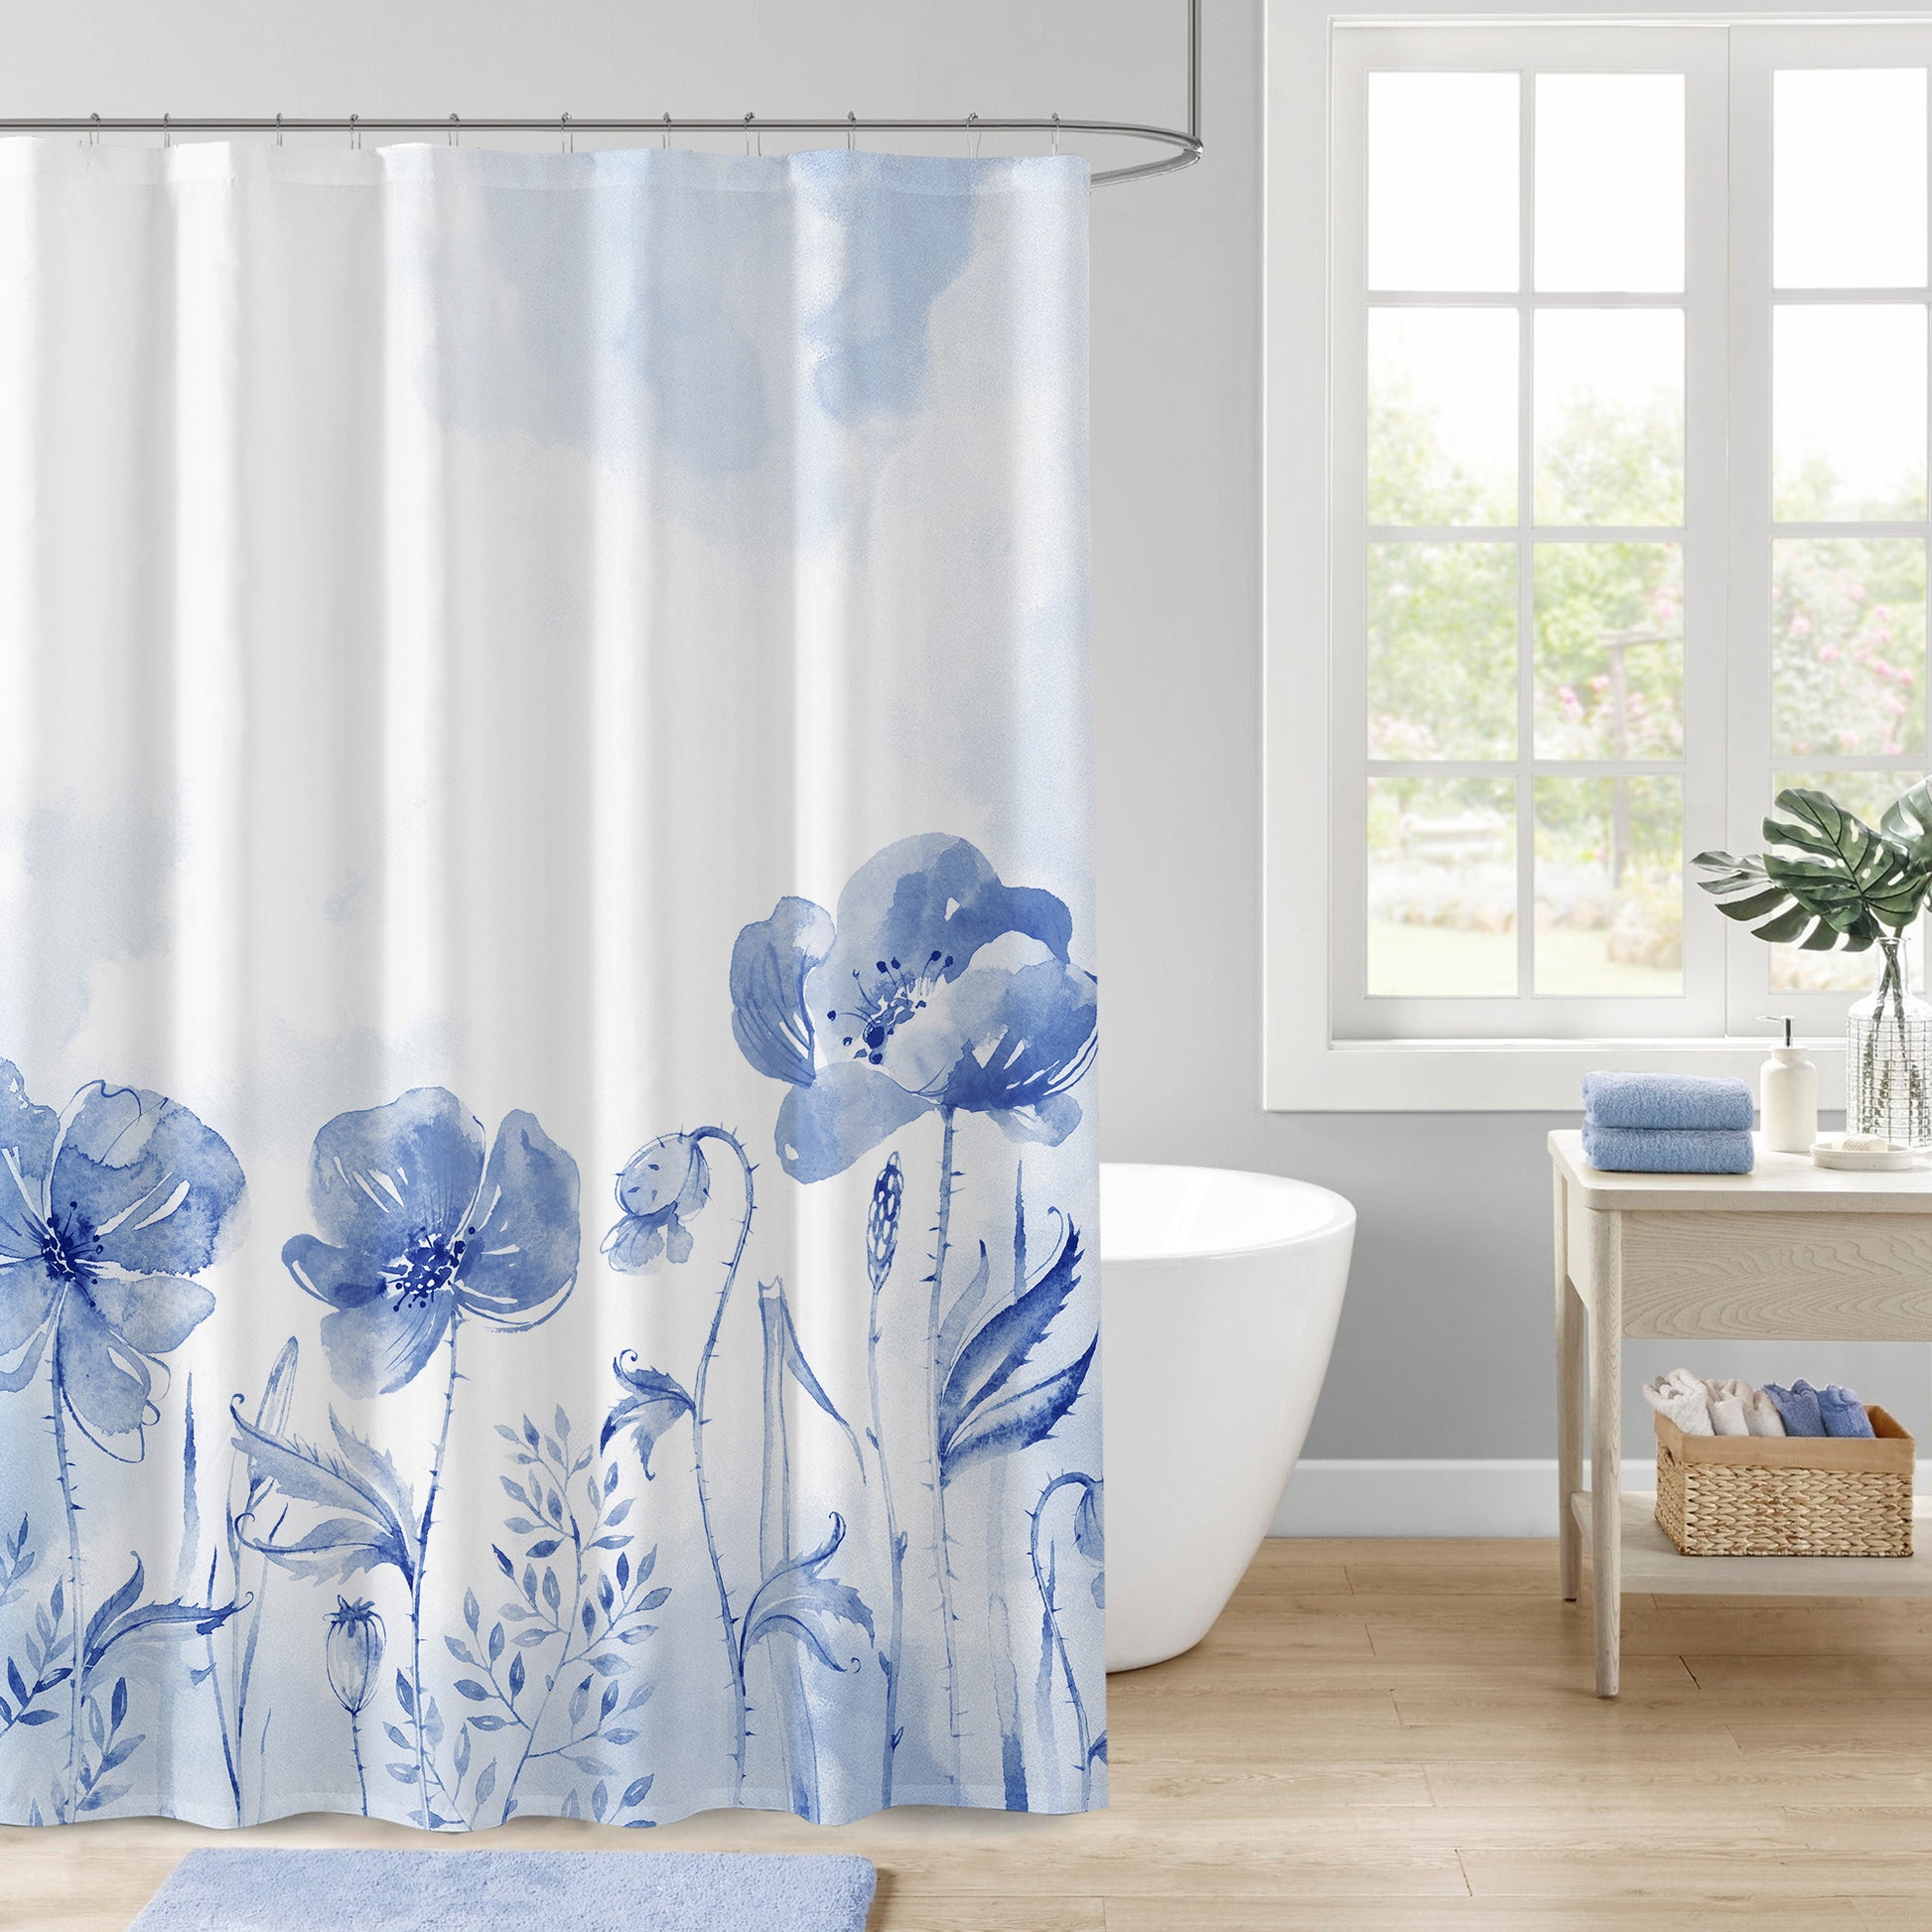 Style Quarters Shower Curtain-Blue Shower Curtain 72x72 Inch Shower Cu